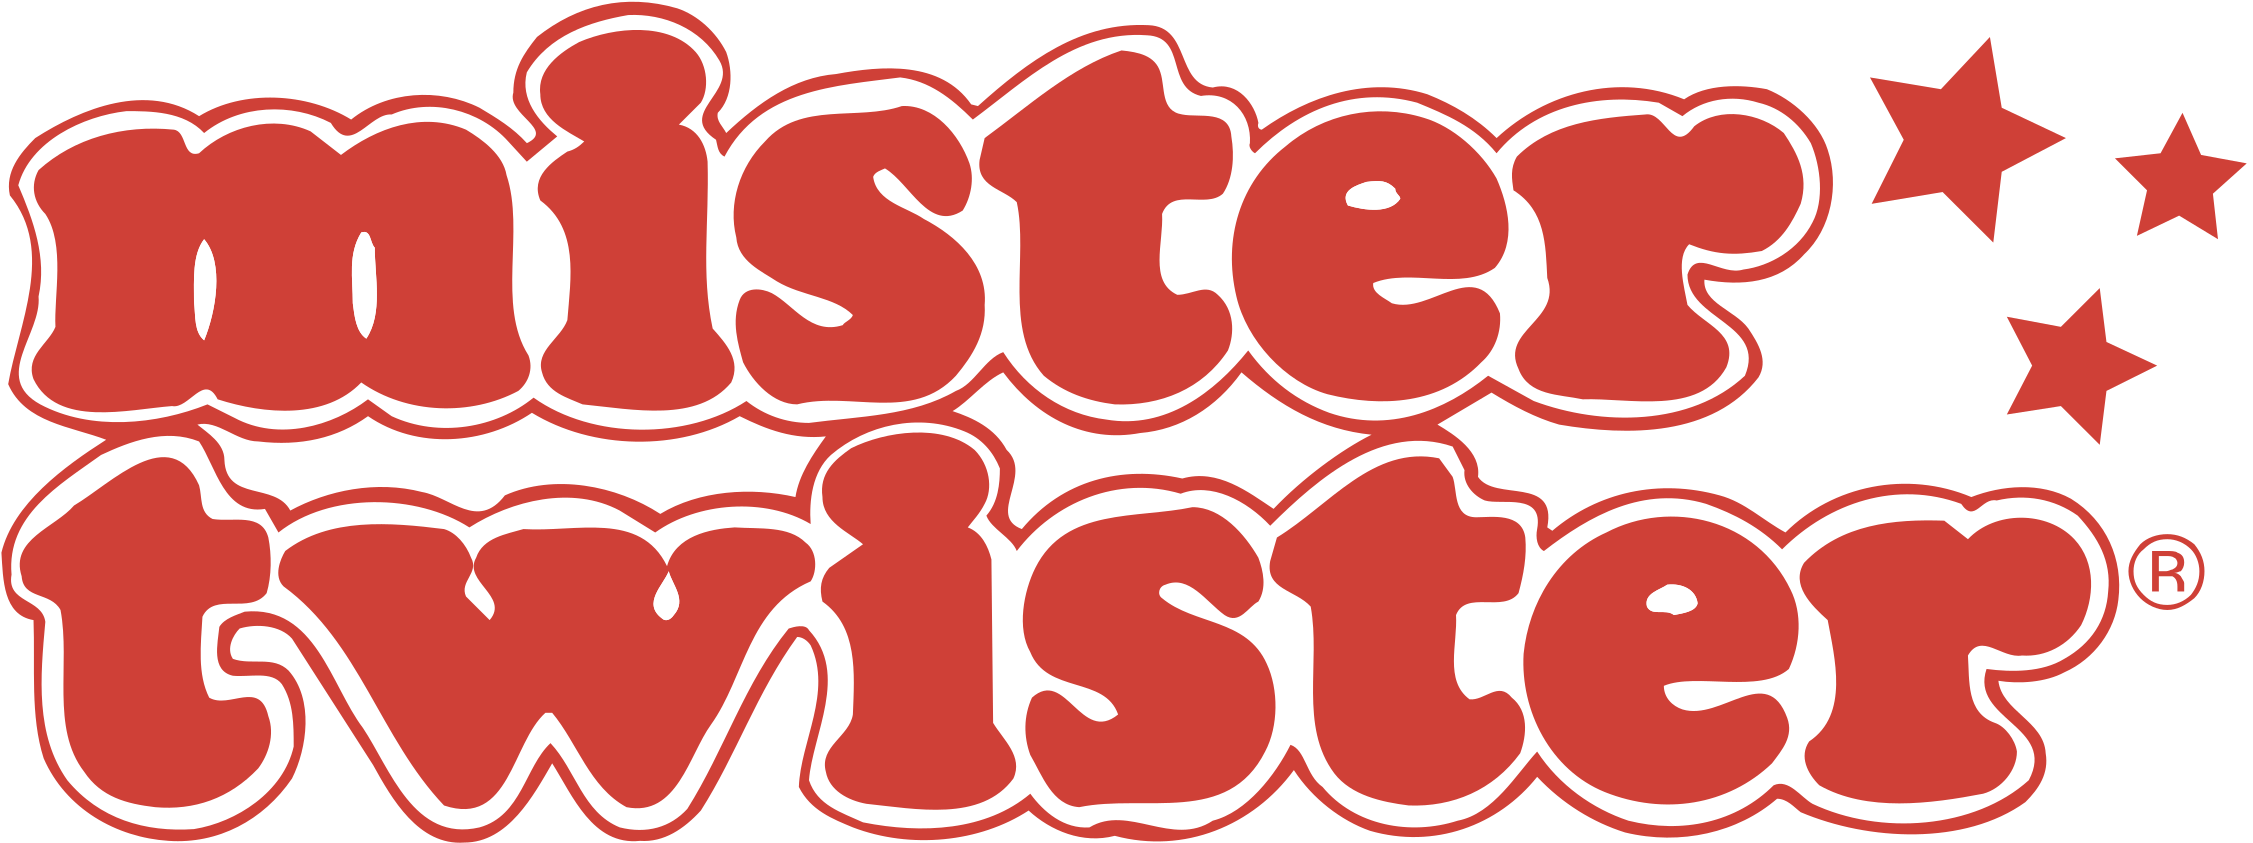 Download Mister Twister Logo Png Transparent PNG Image with No Background 